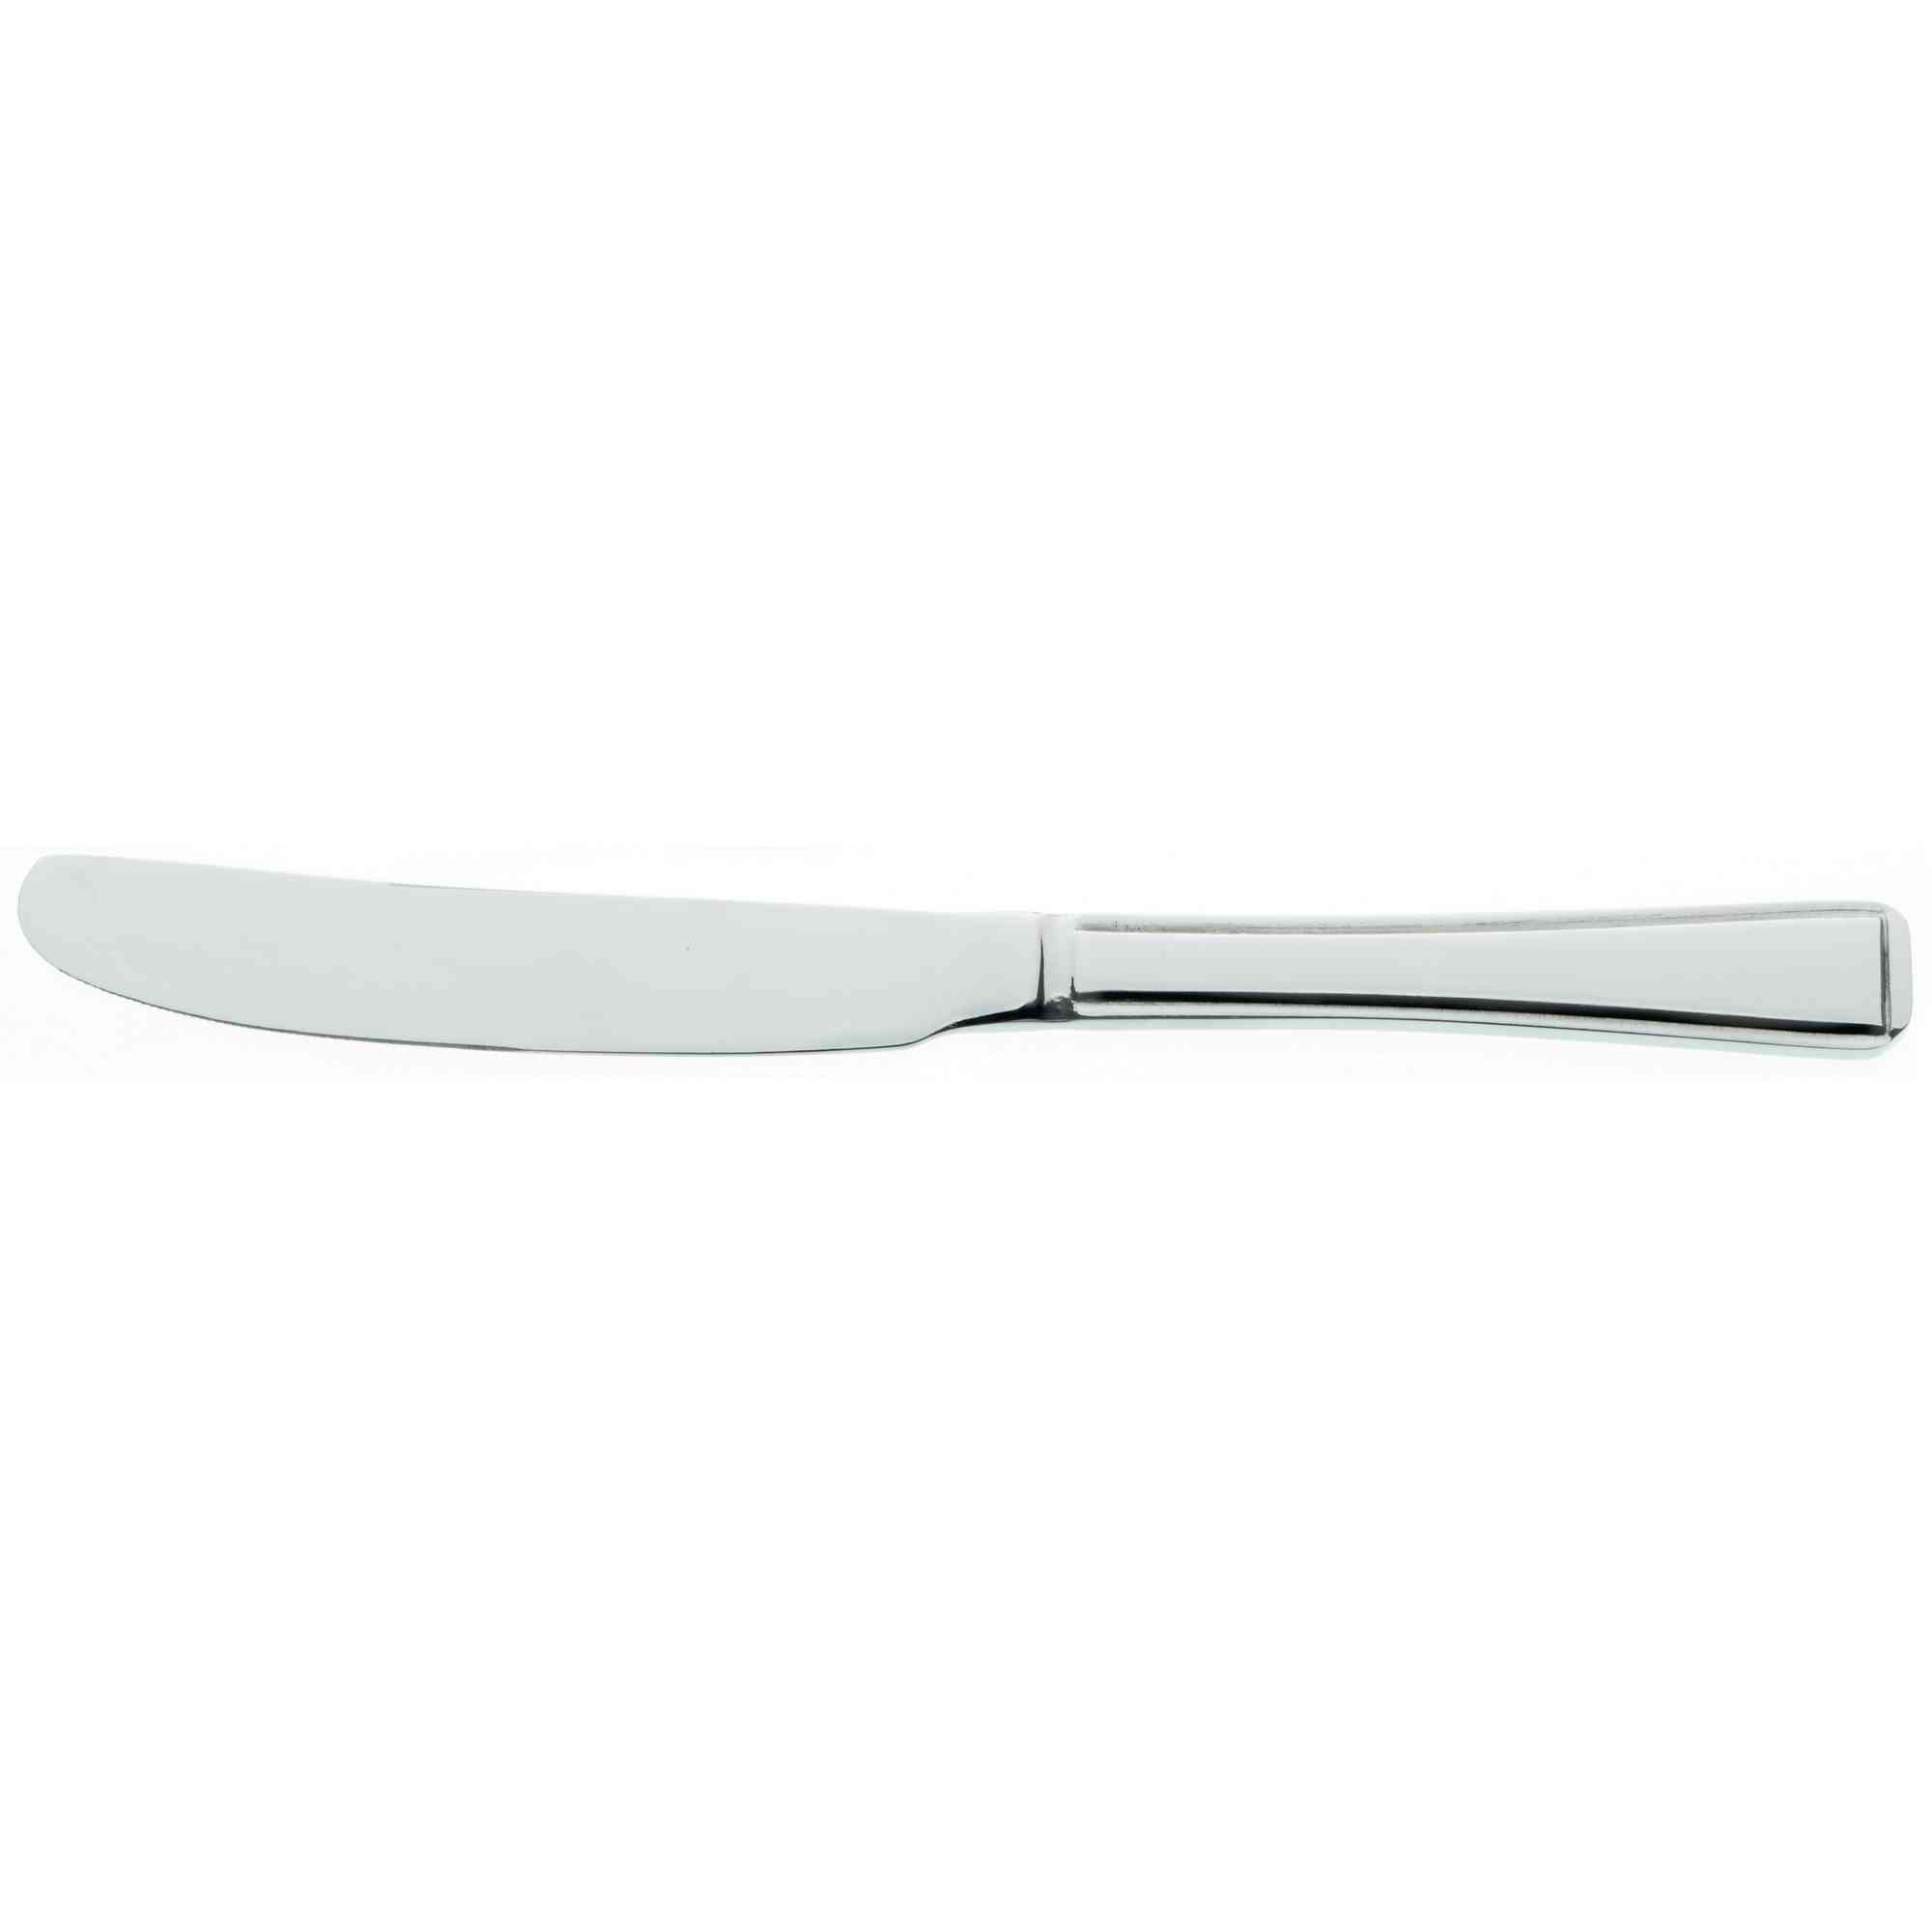 Harley Knife - Medium Knife